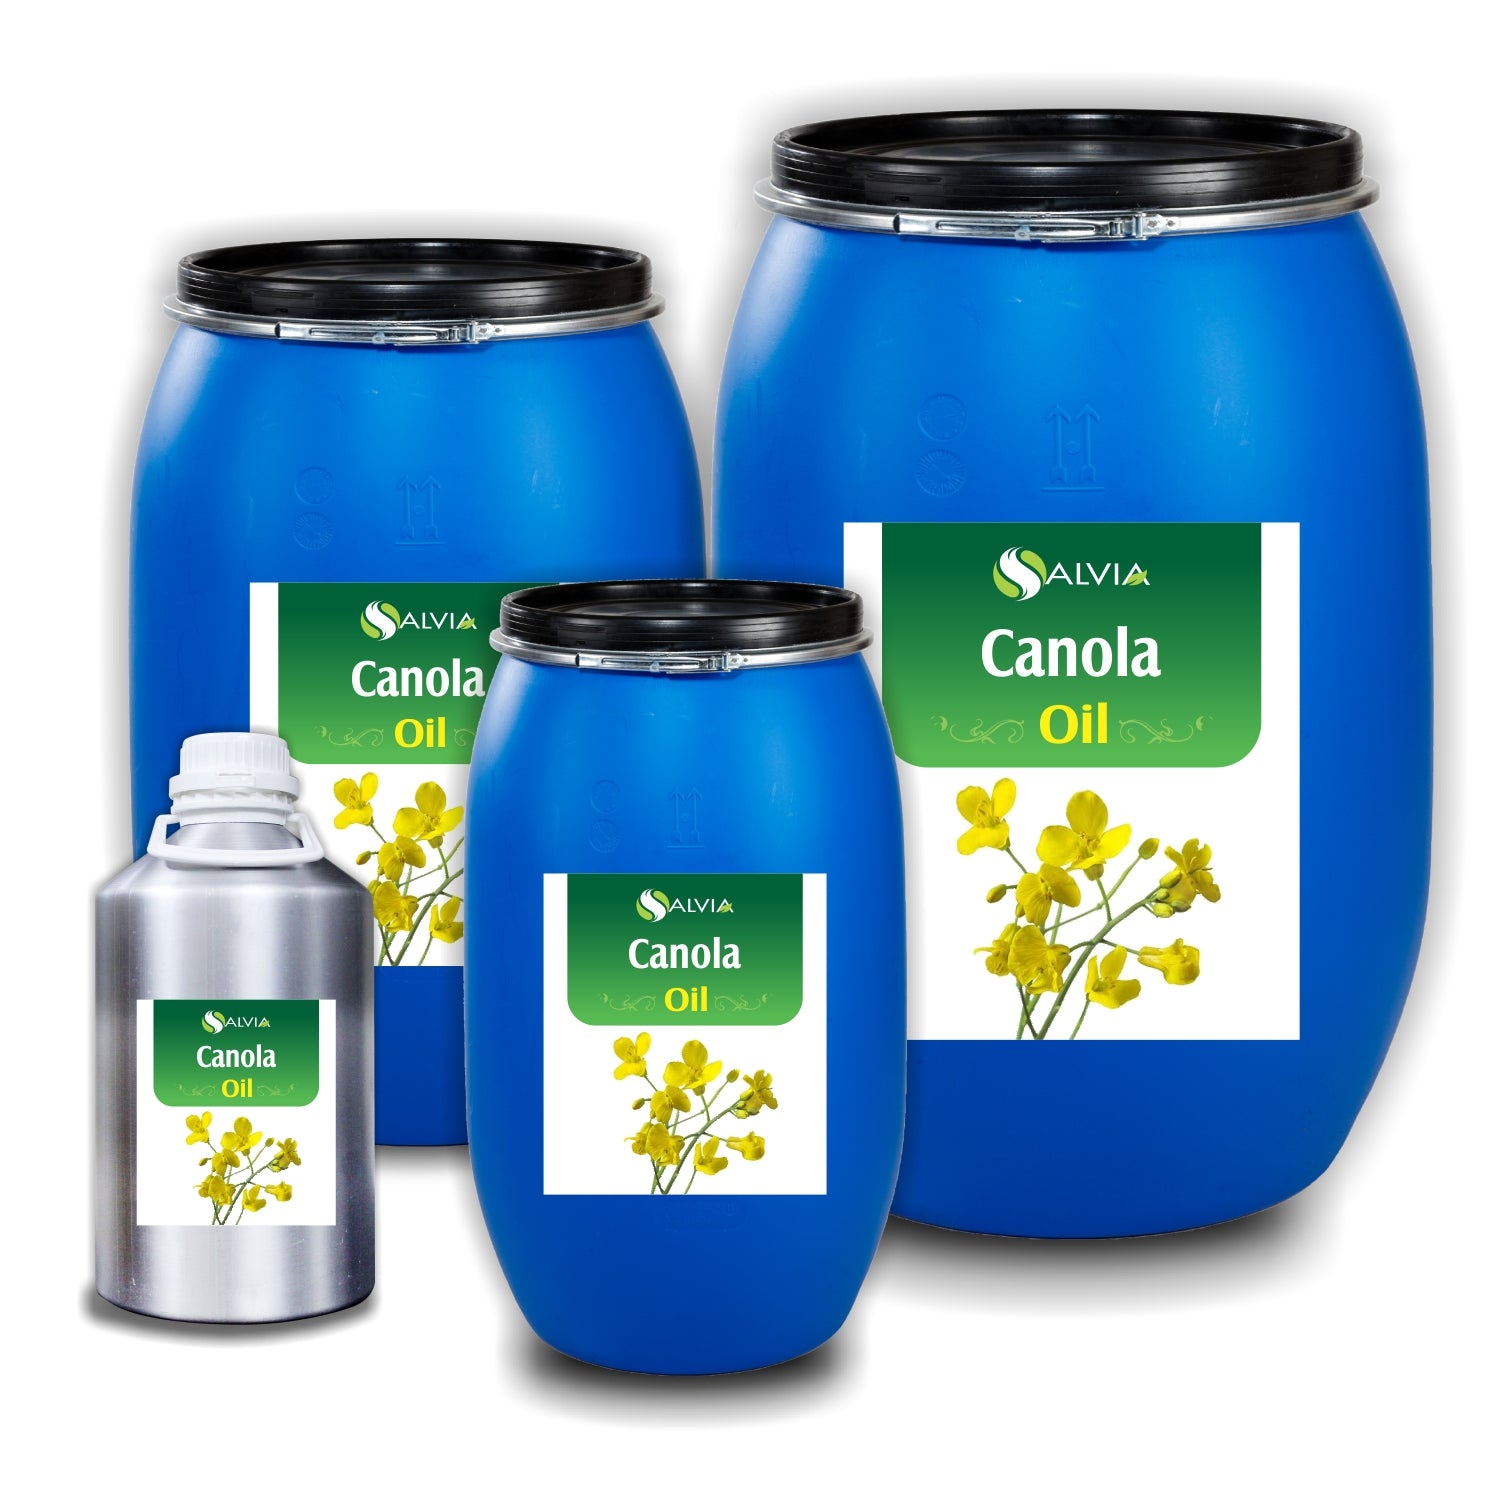 Salvia Natural Carrier Oils 10kg Canola Oil ( Brassica napus)100% Natural Pure Carrier Oil